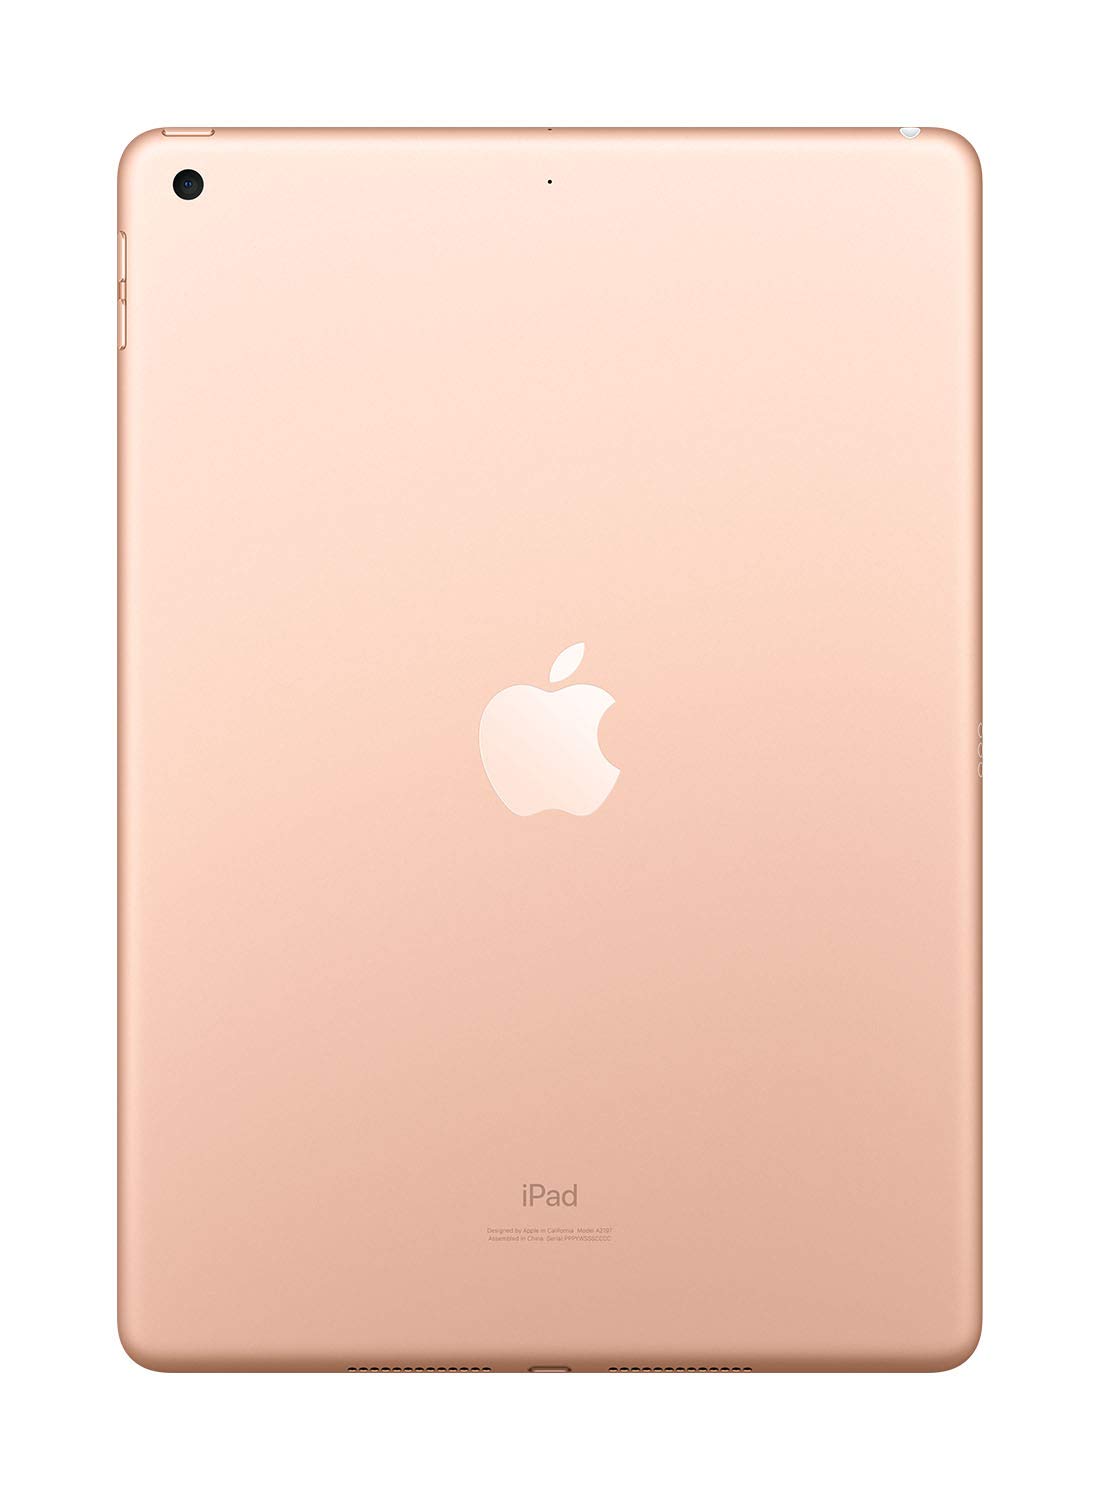 Apple iPad (10.2-inch, Wi-Fi, 32GB) - Gold (Previous Model)﻿